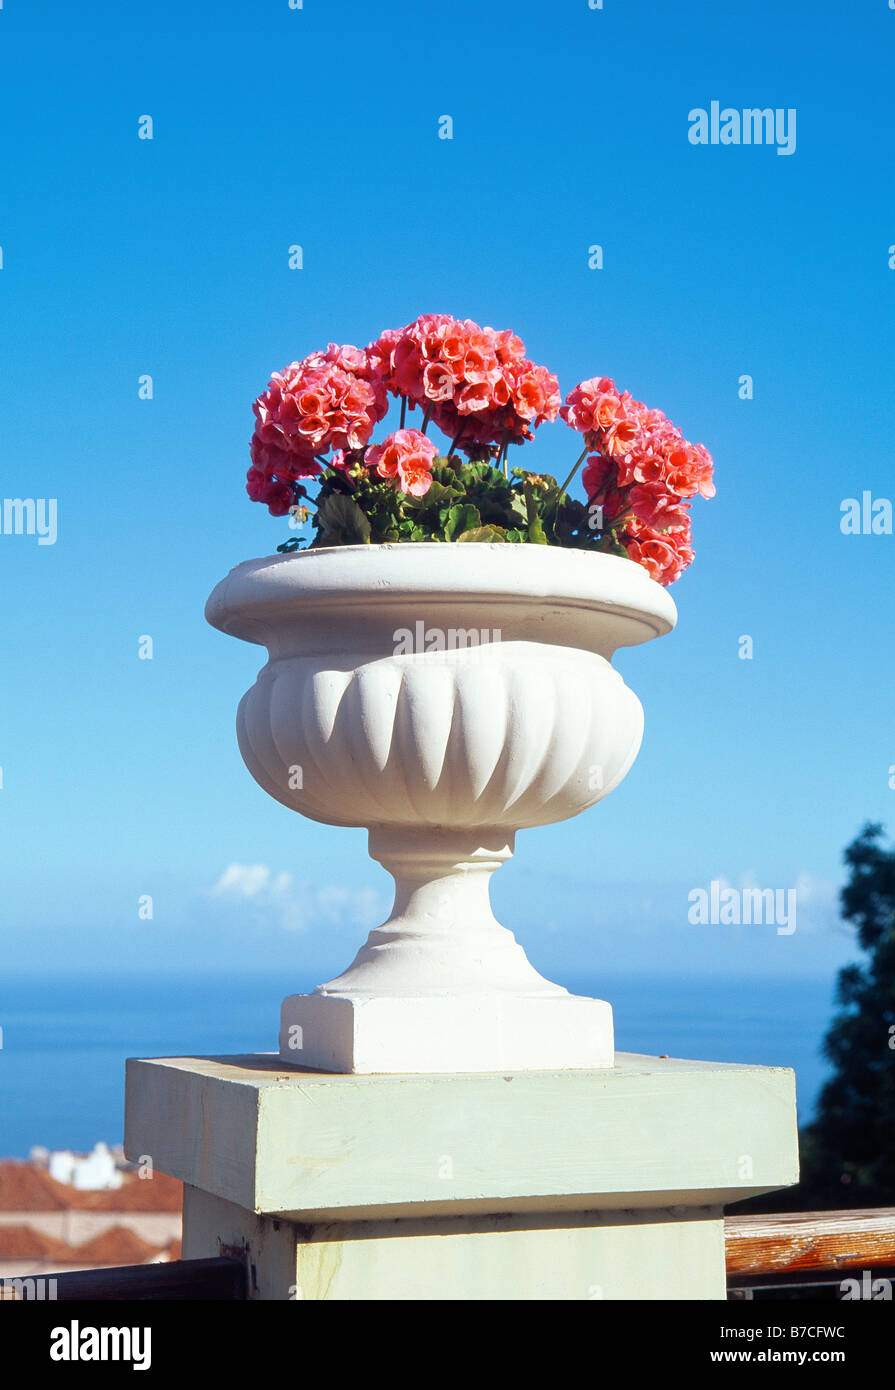 Geranium flowers in white pot. La Orotava. Tenerife island. Canary Islands. Spain. Stock Photo